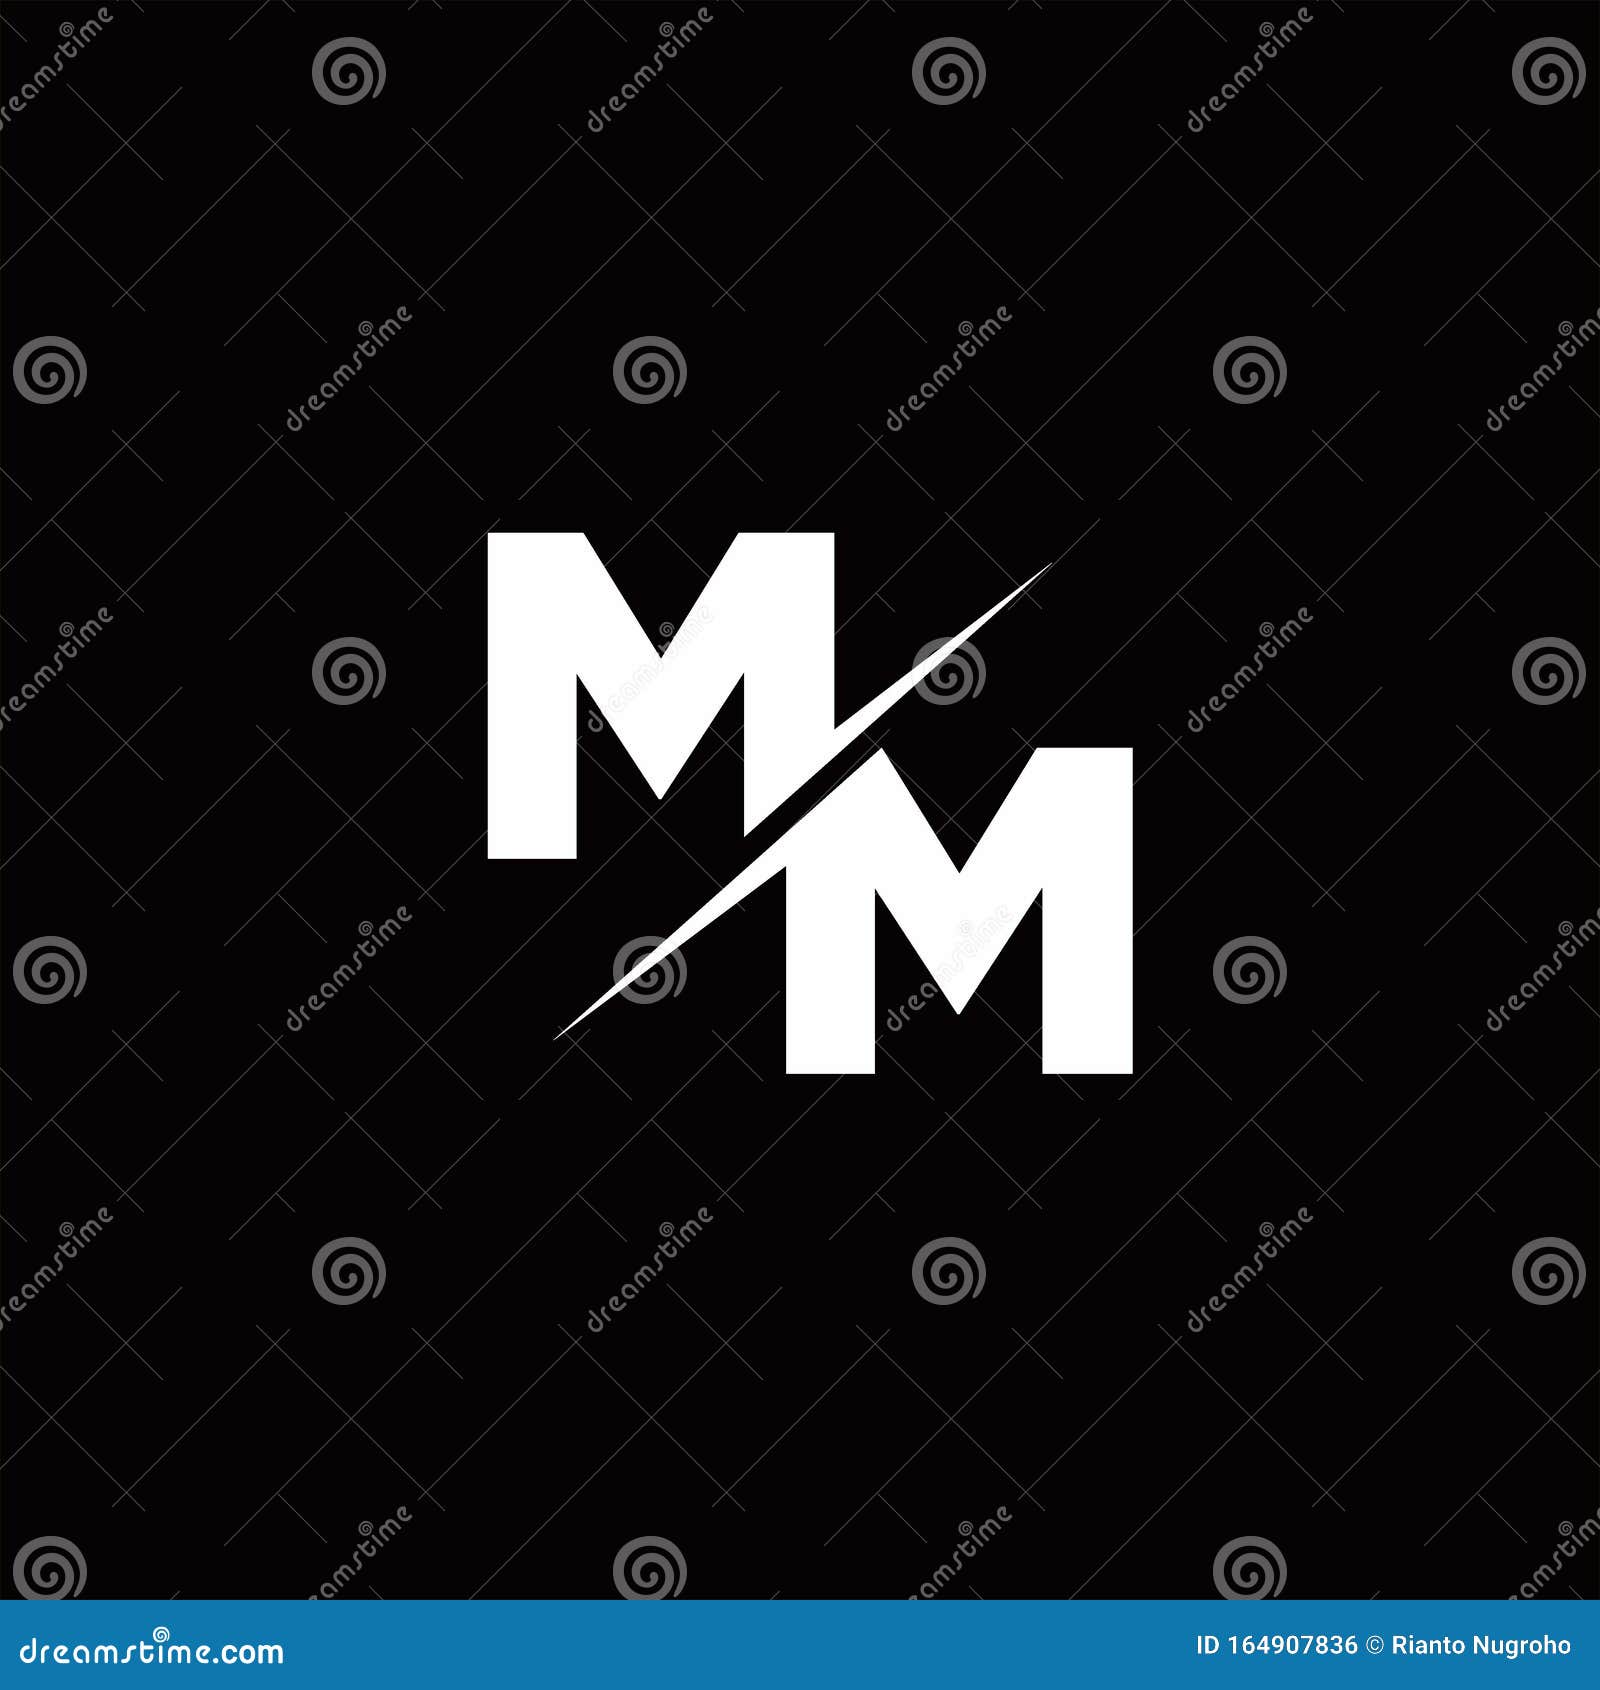 Mm Lettermark Monogram Circle Round Vector Stock Illustration